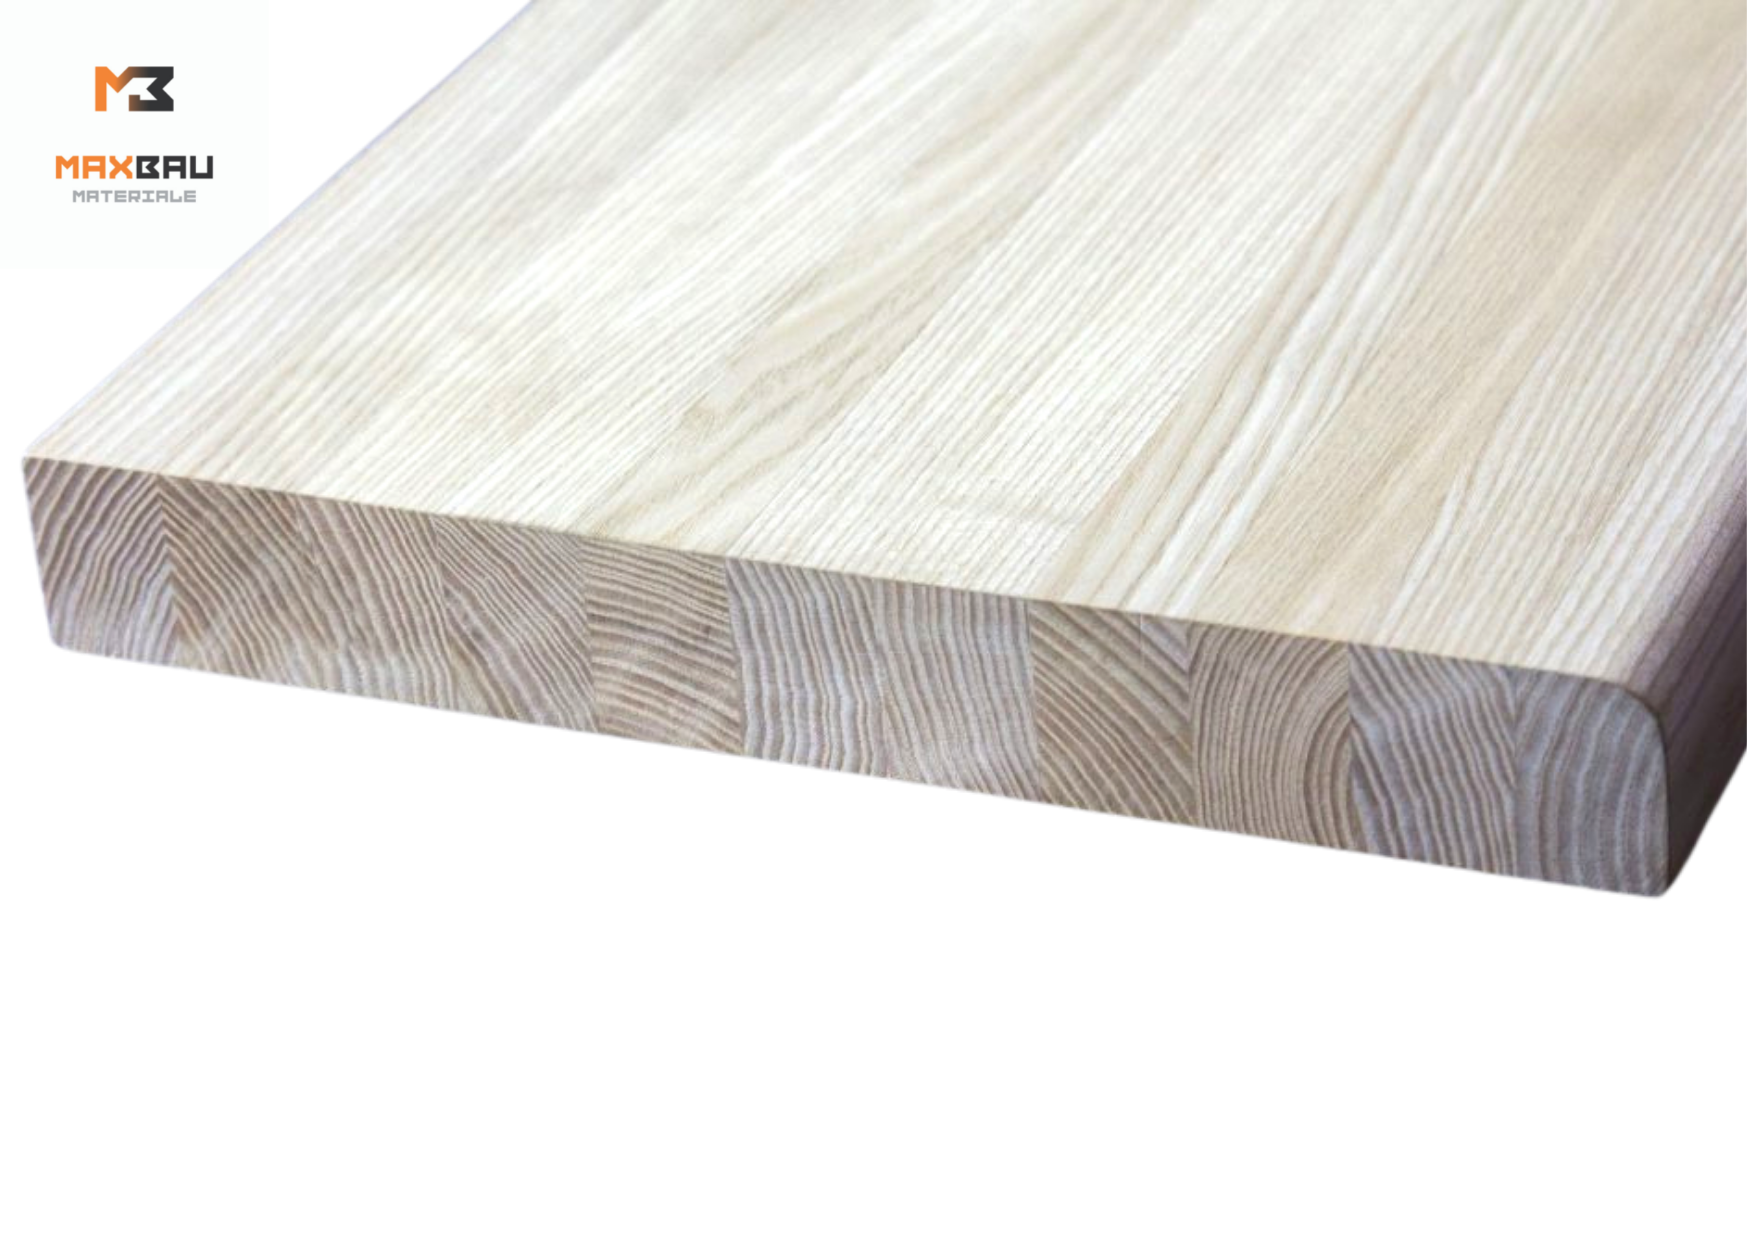 Placi din lemn incleiat - Placa de lemn incleiat MaxBau 2500 x 200 x 28 mm Clasa AB, maxbau.ro